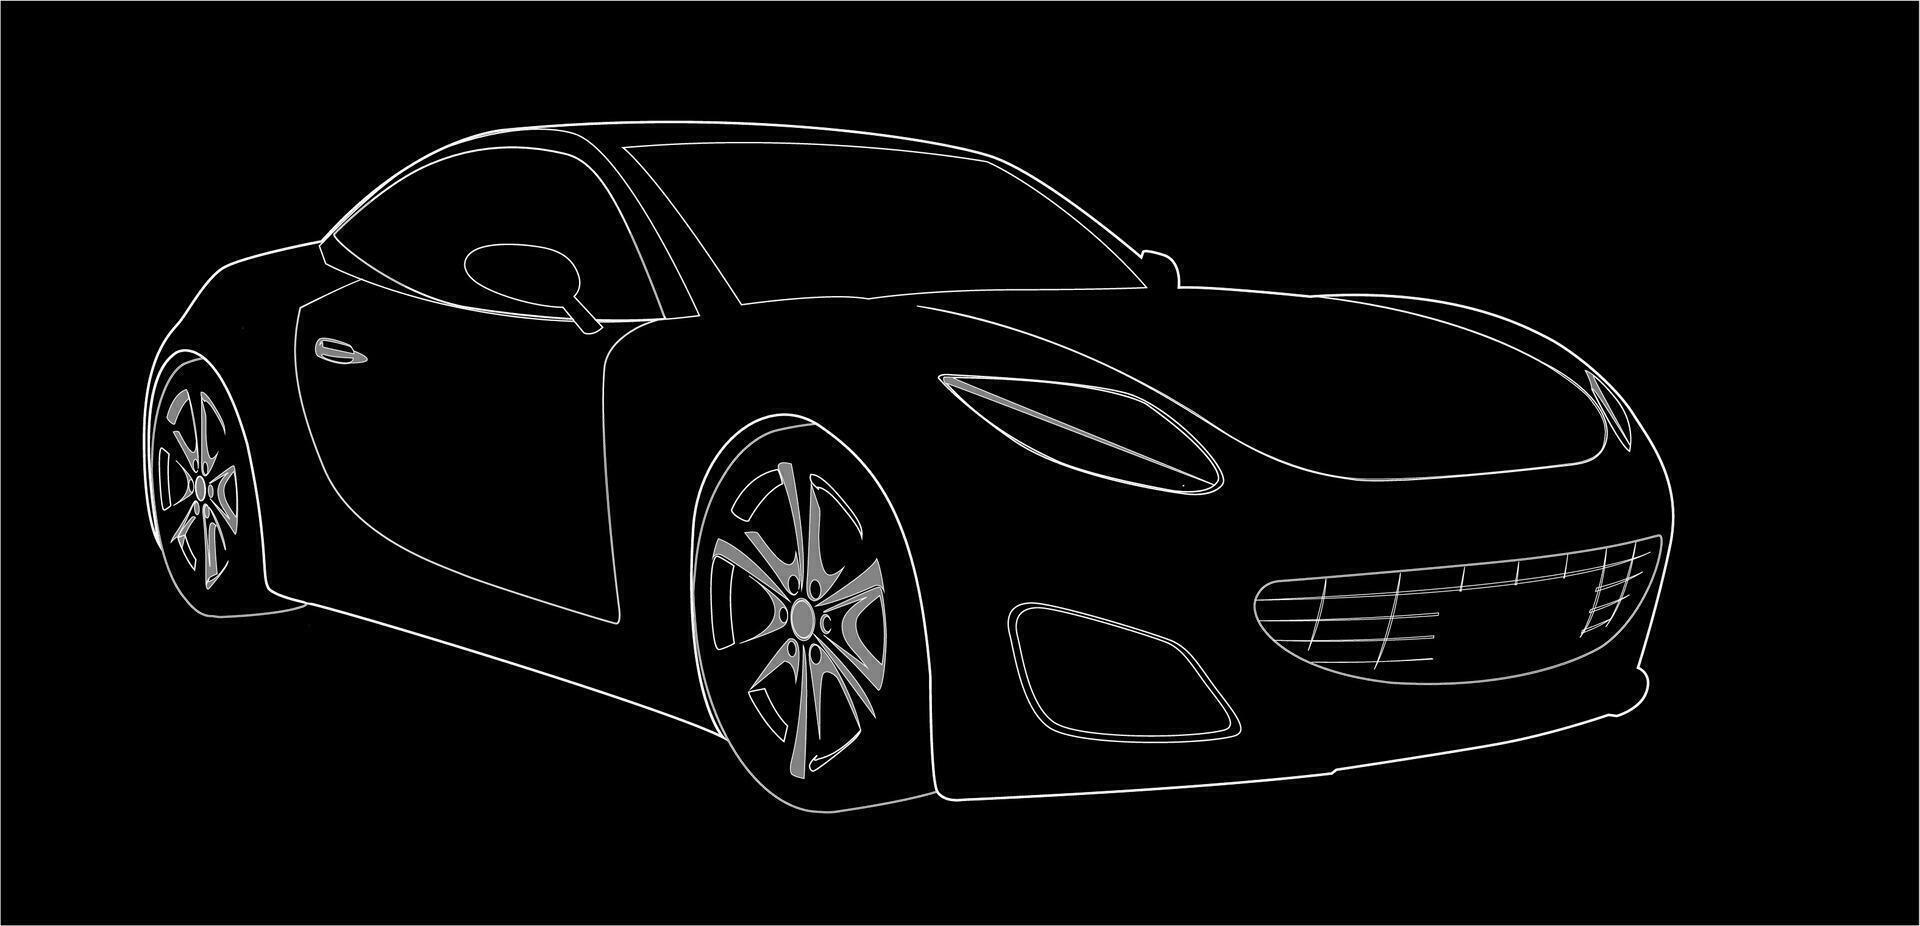 deporte coche bosquejo terminado negro fondo, vector ilustración. moderno carro deportivo